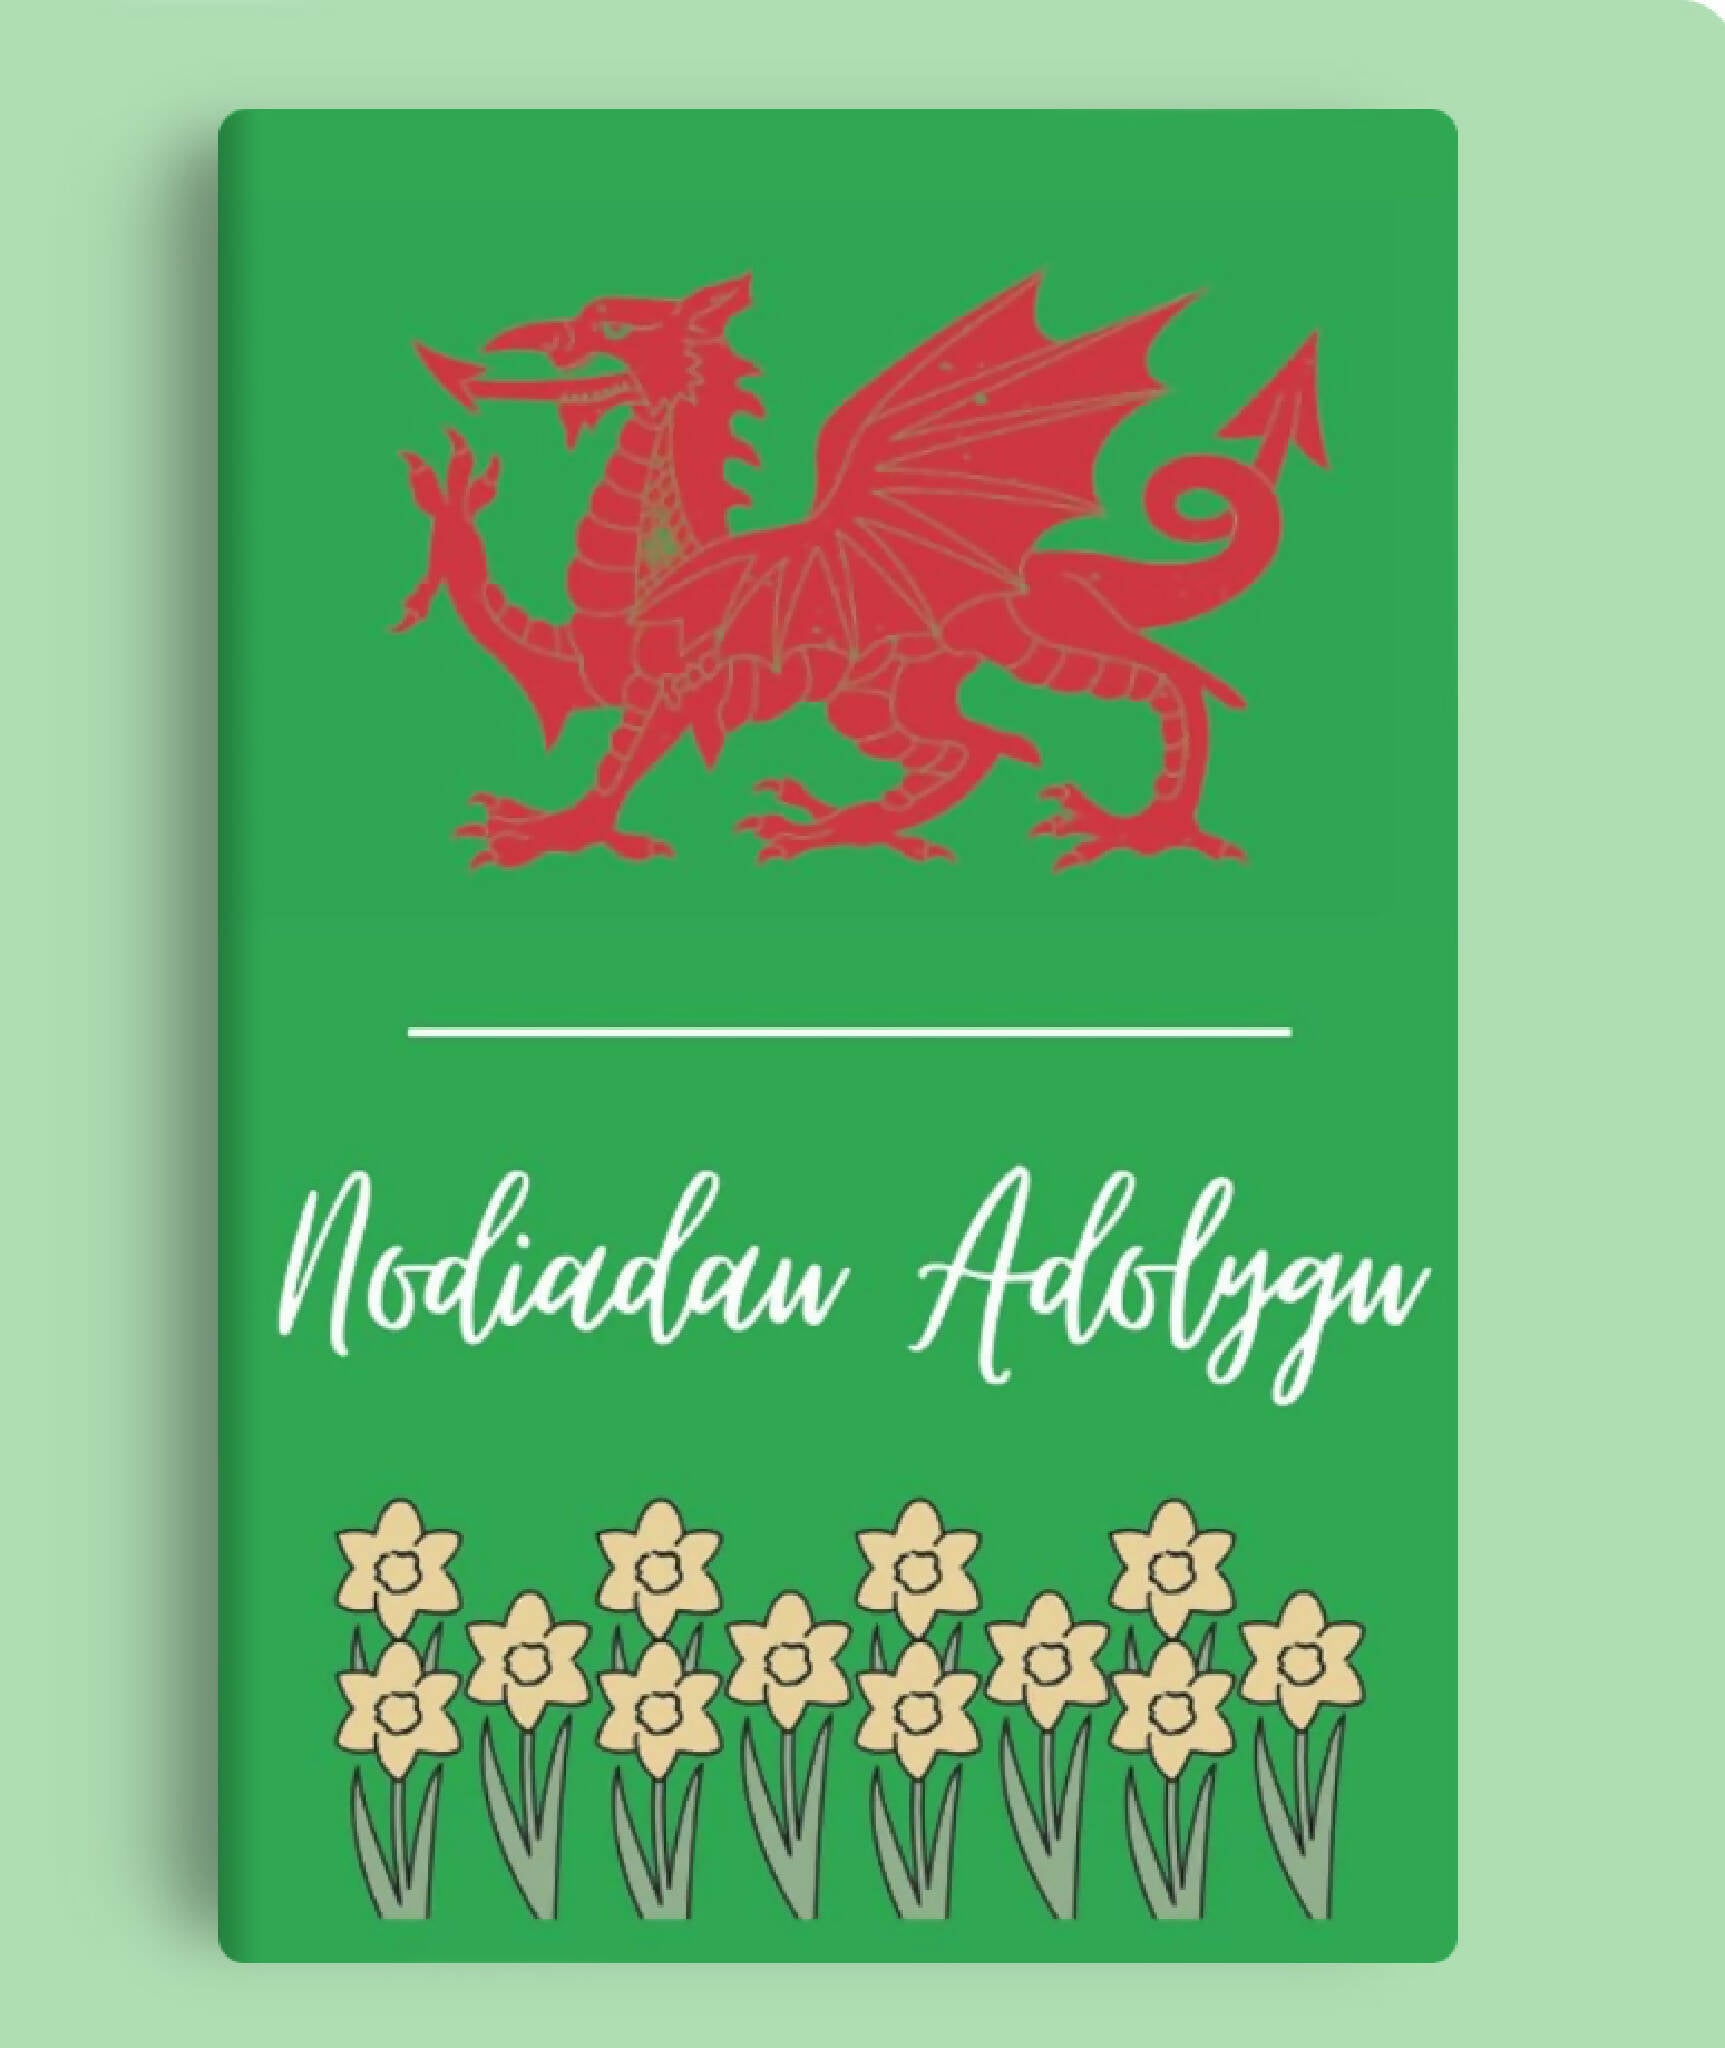 Nodiadau Adolygu - Welsh Revision Notes Notebook - GM Notebooks